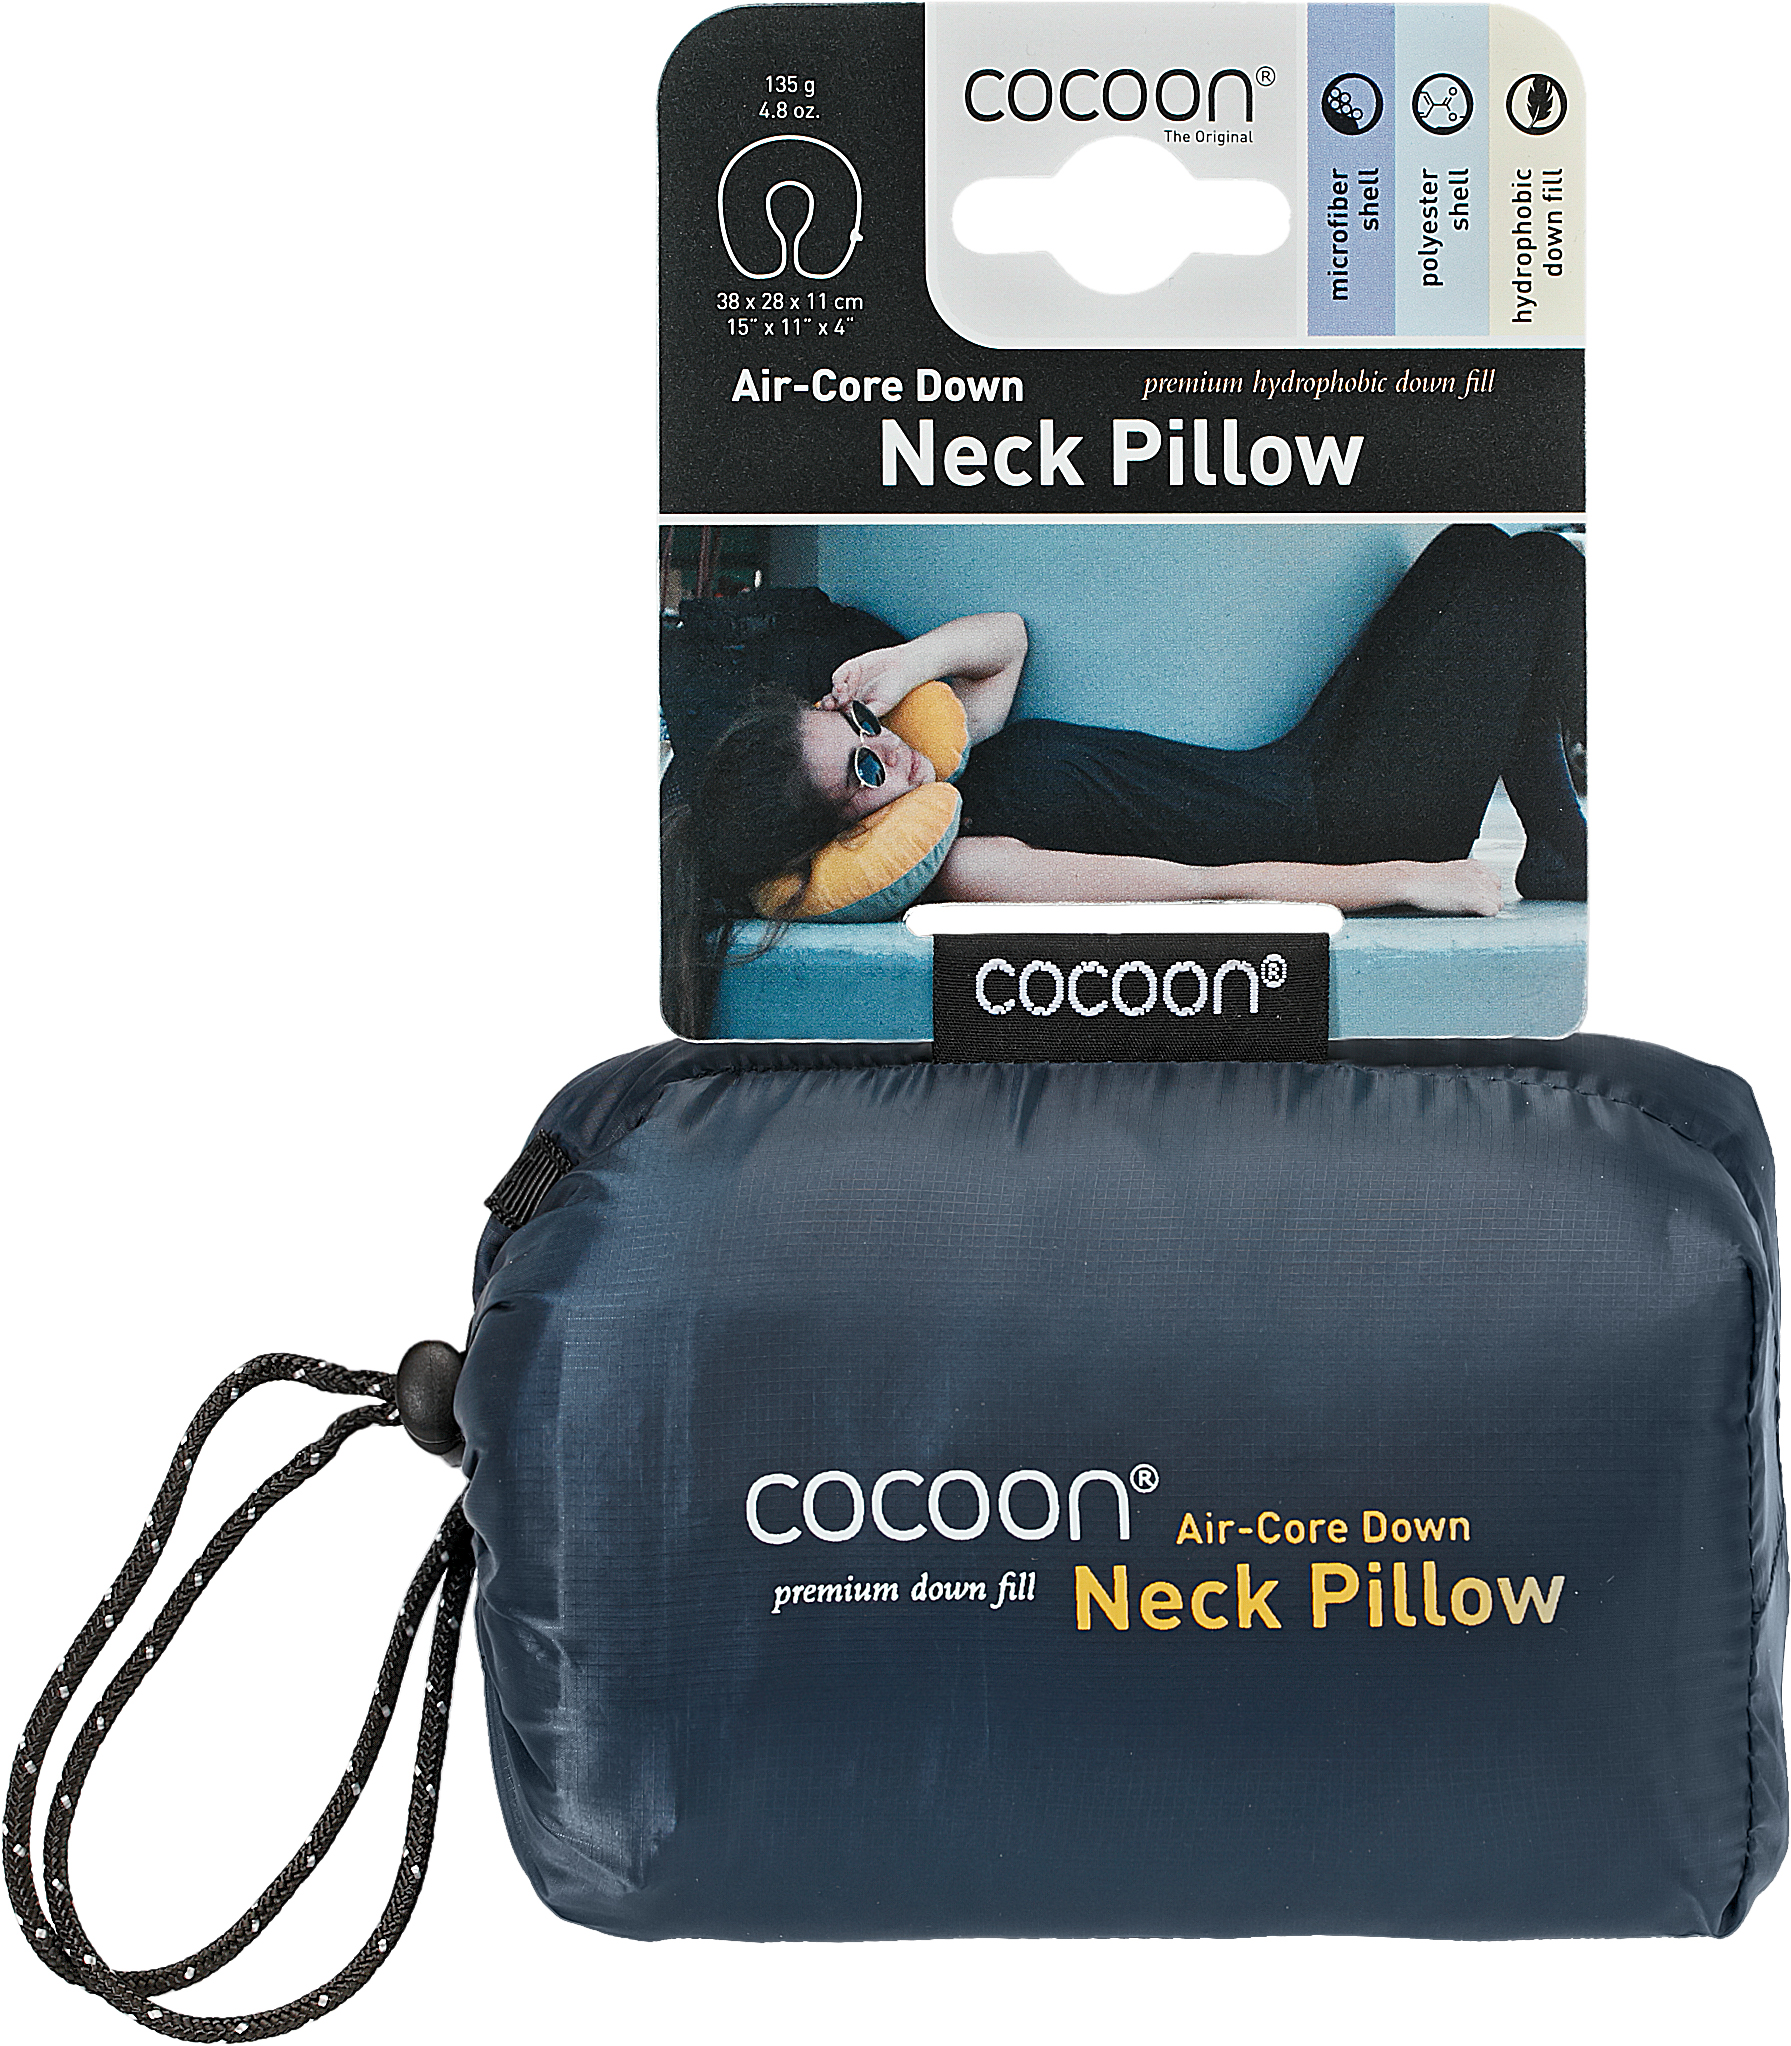 Air-Core Down Travel Pillow, dark indigo/grey